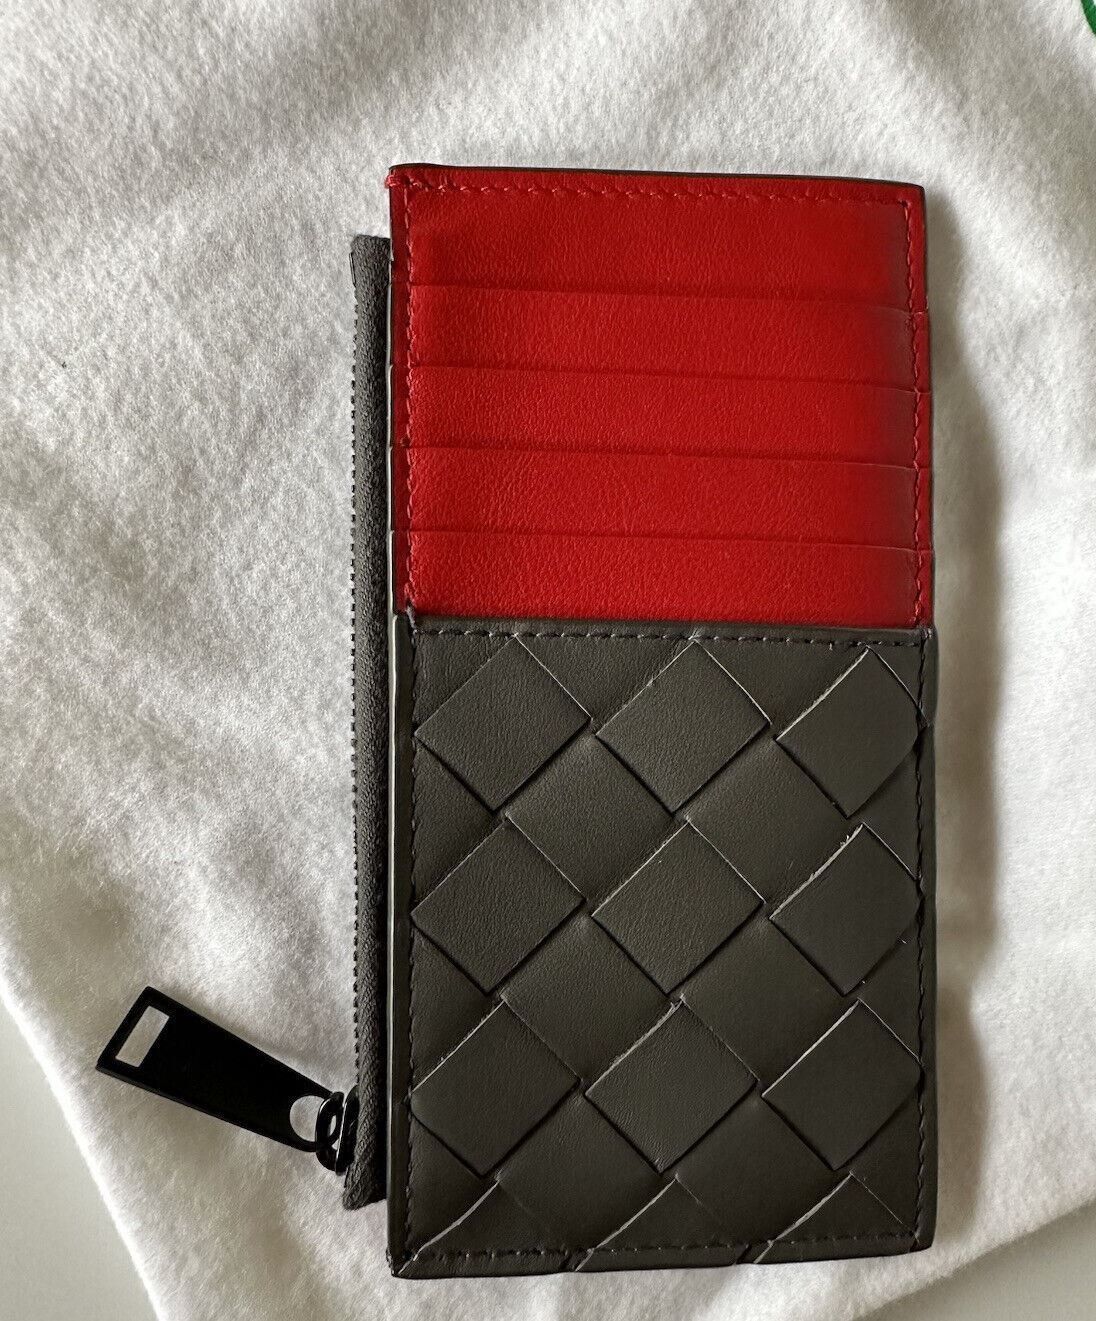 NWT $520 Bottega Veneta Leather Slim Wallet Intreccio Weave Graphite, Red 591379